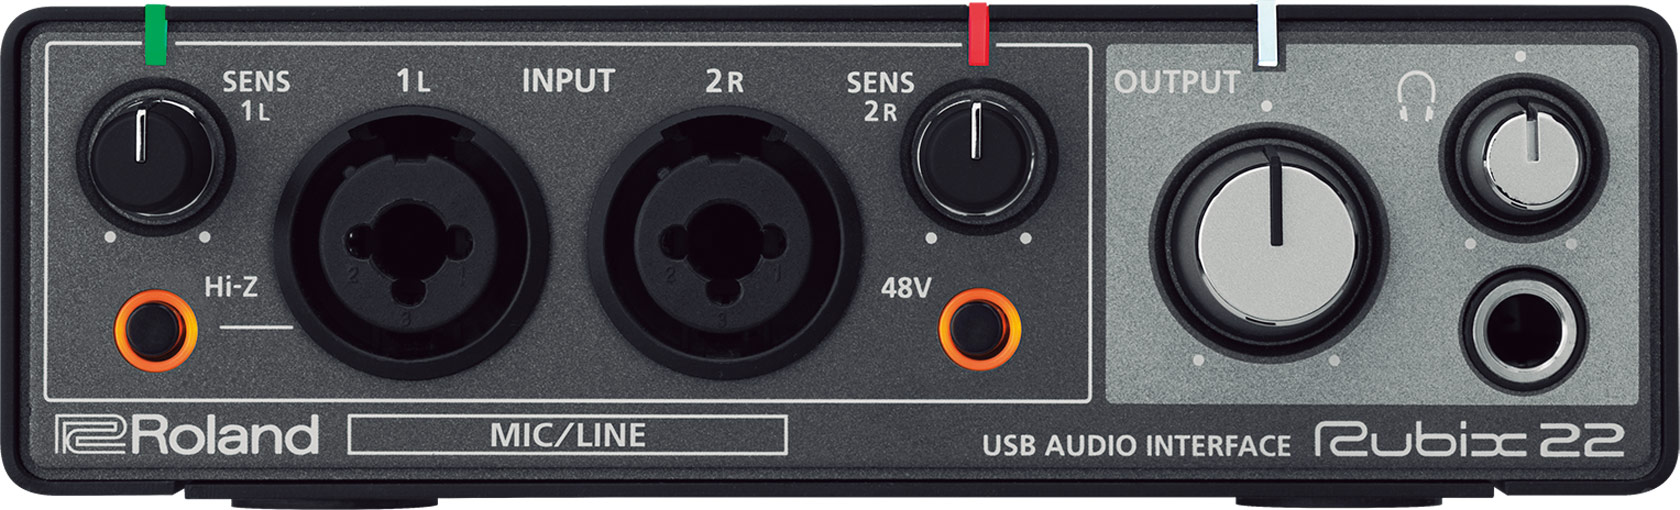 Roland - Rubix22 | USB Audio Interface